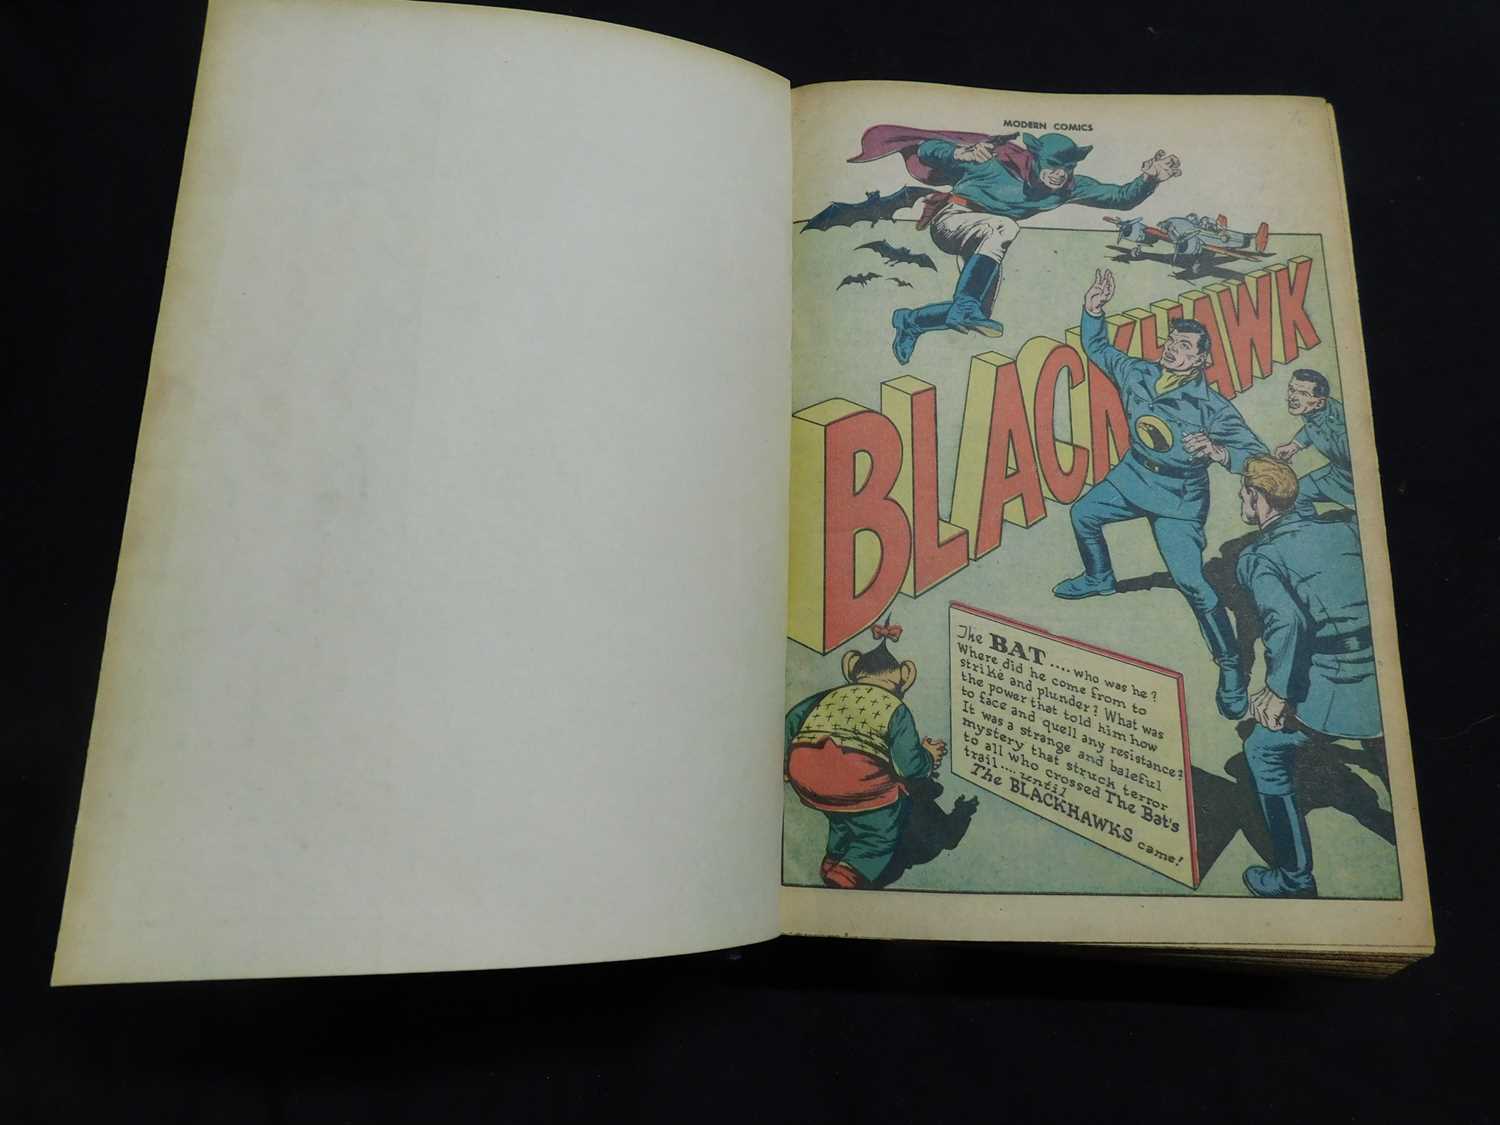 MODERN COMICS - BLACKHAWK (SPINE TITLE), bound volume of US 1950s quality comics titled MODERN - Image 2 of 2